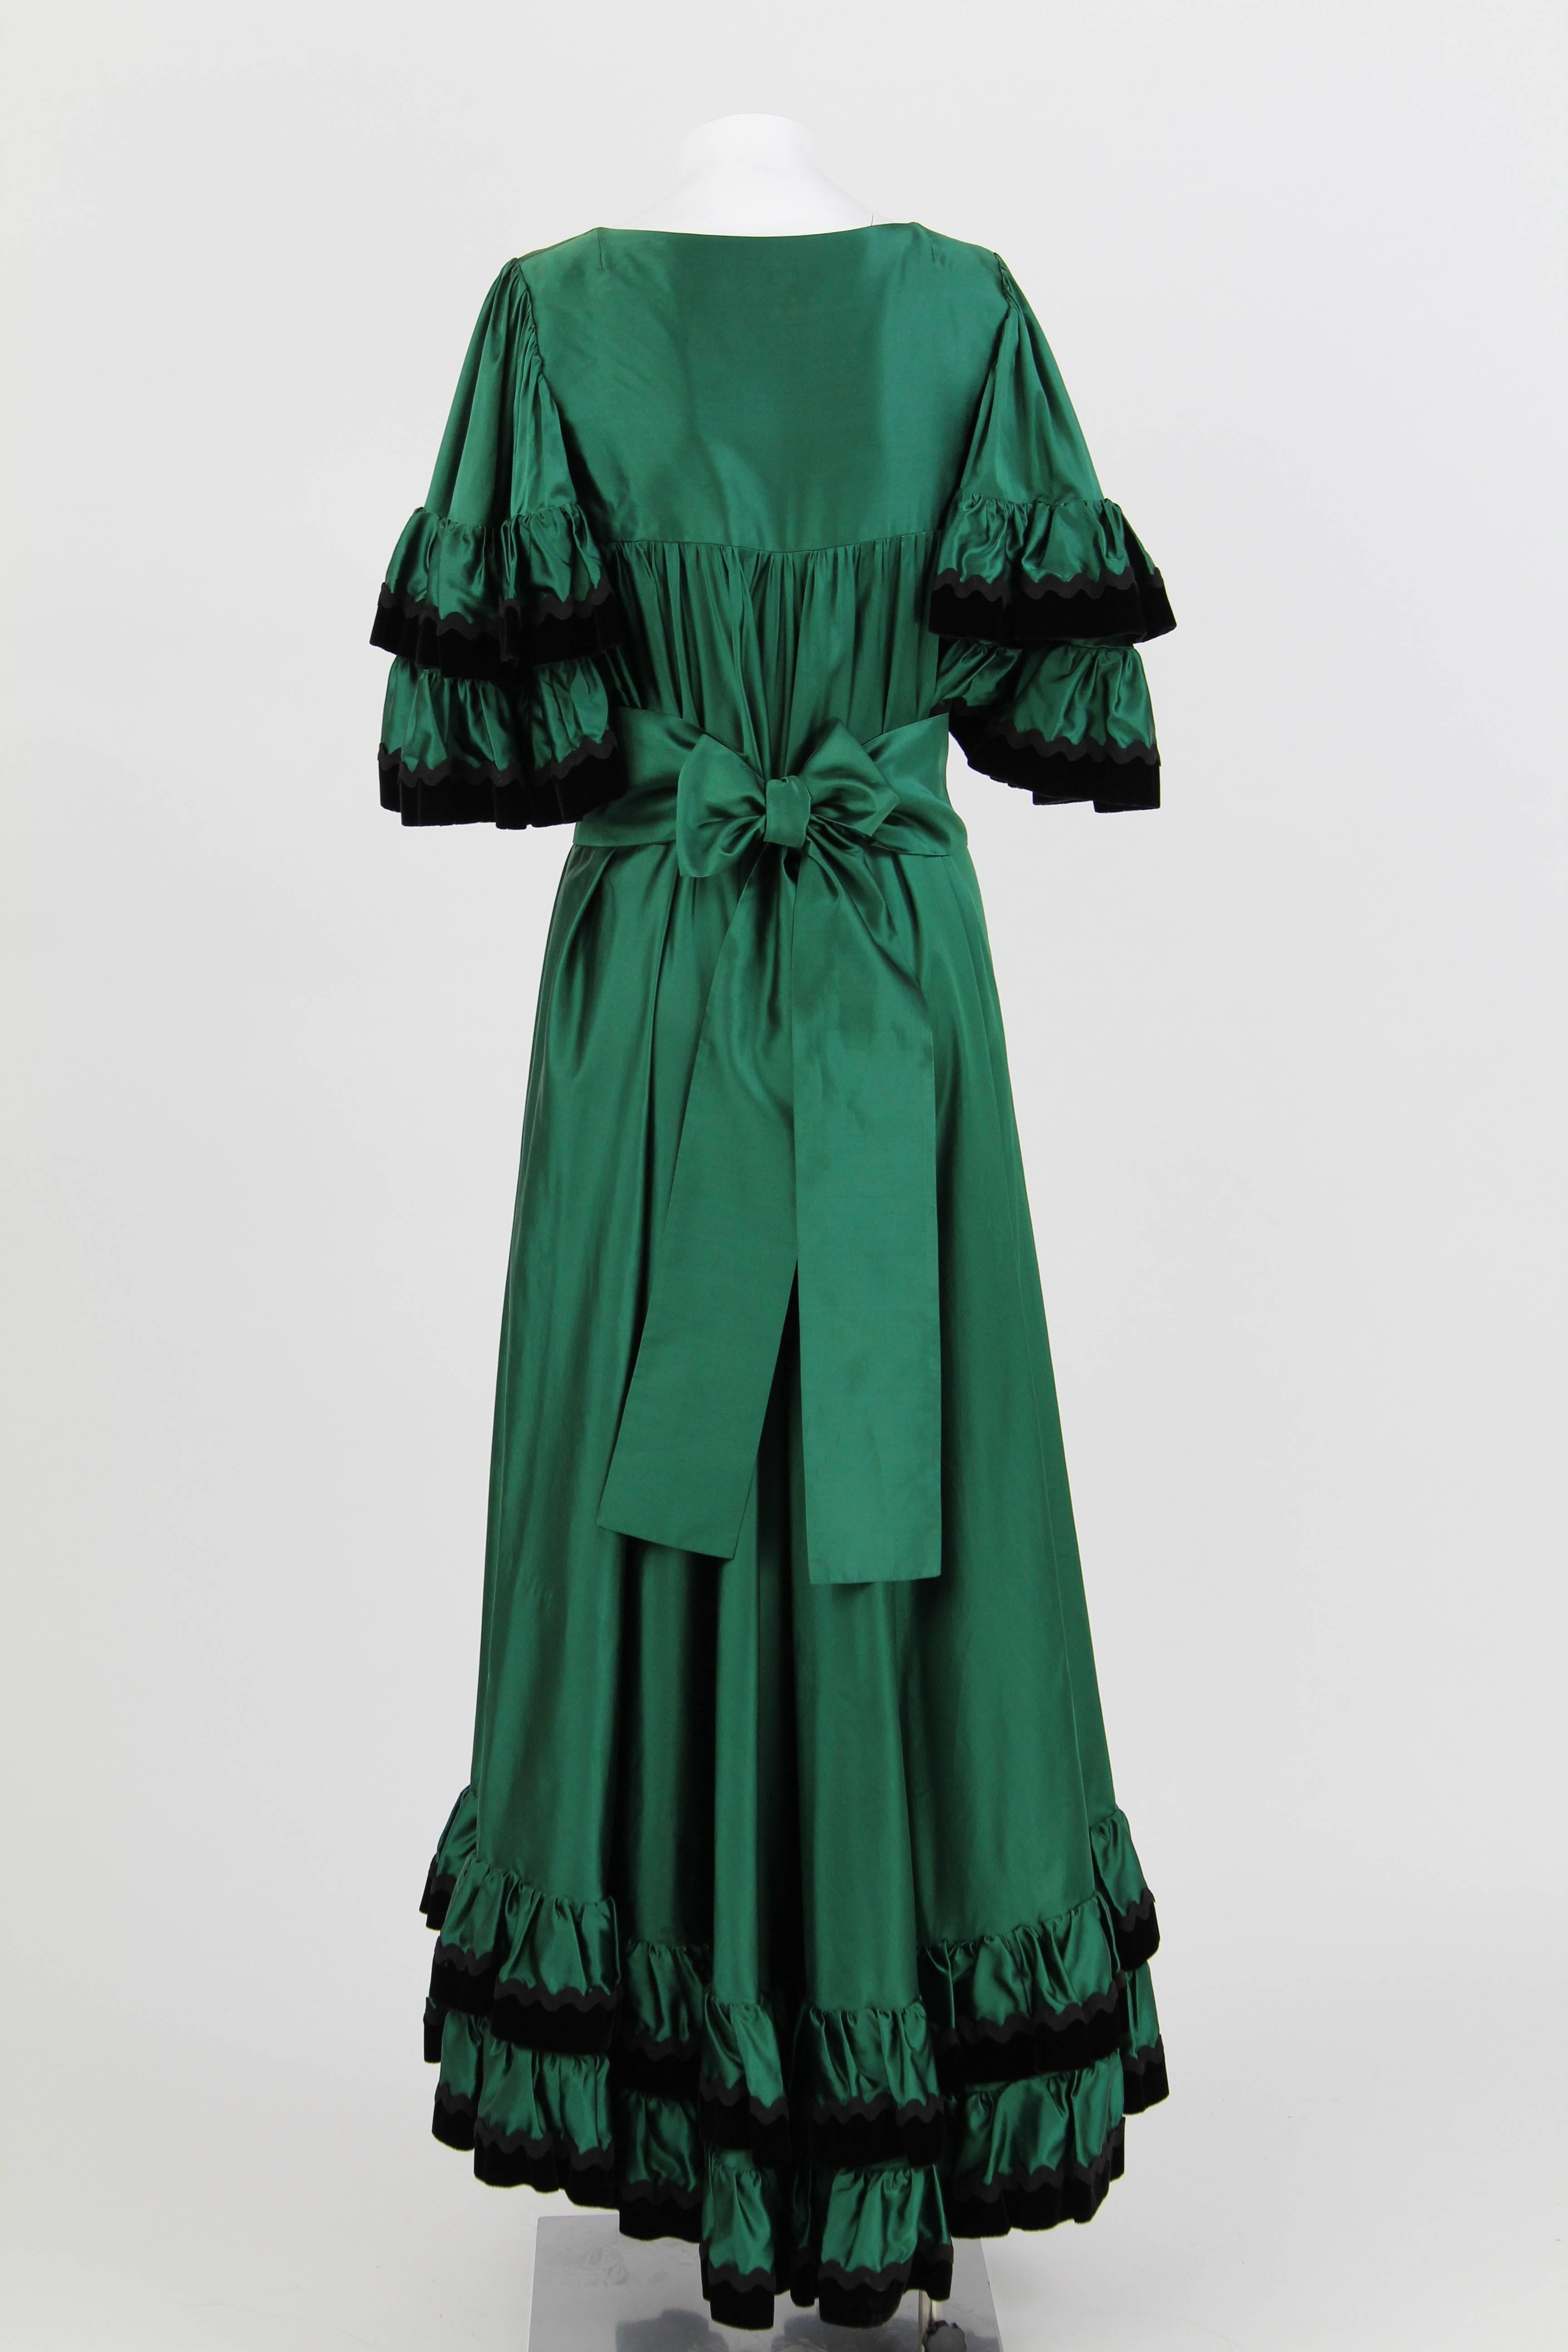 Stop Sénès Green Long Vintage Dress, 1970s 1